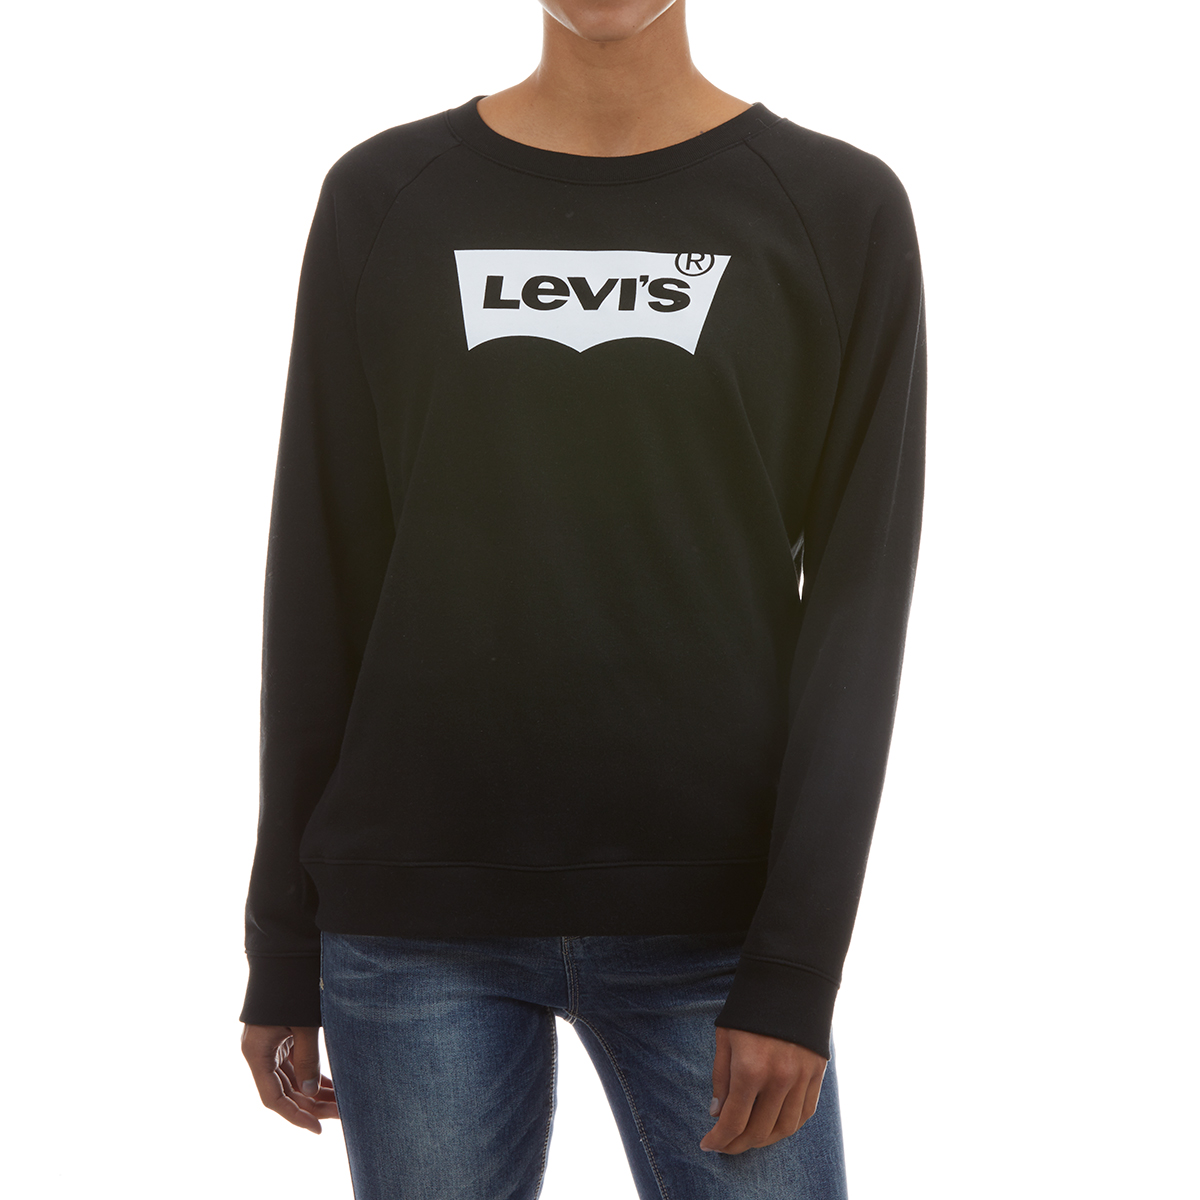 Levi's Women's Long-Sleeve Graphic Crewneck Fleece